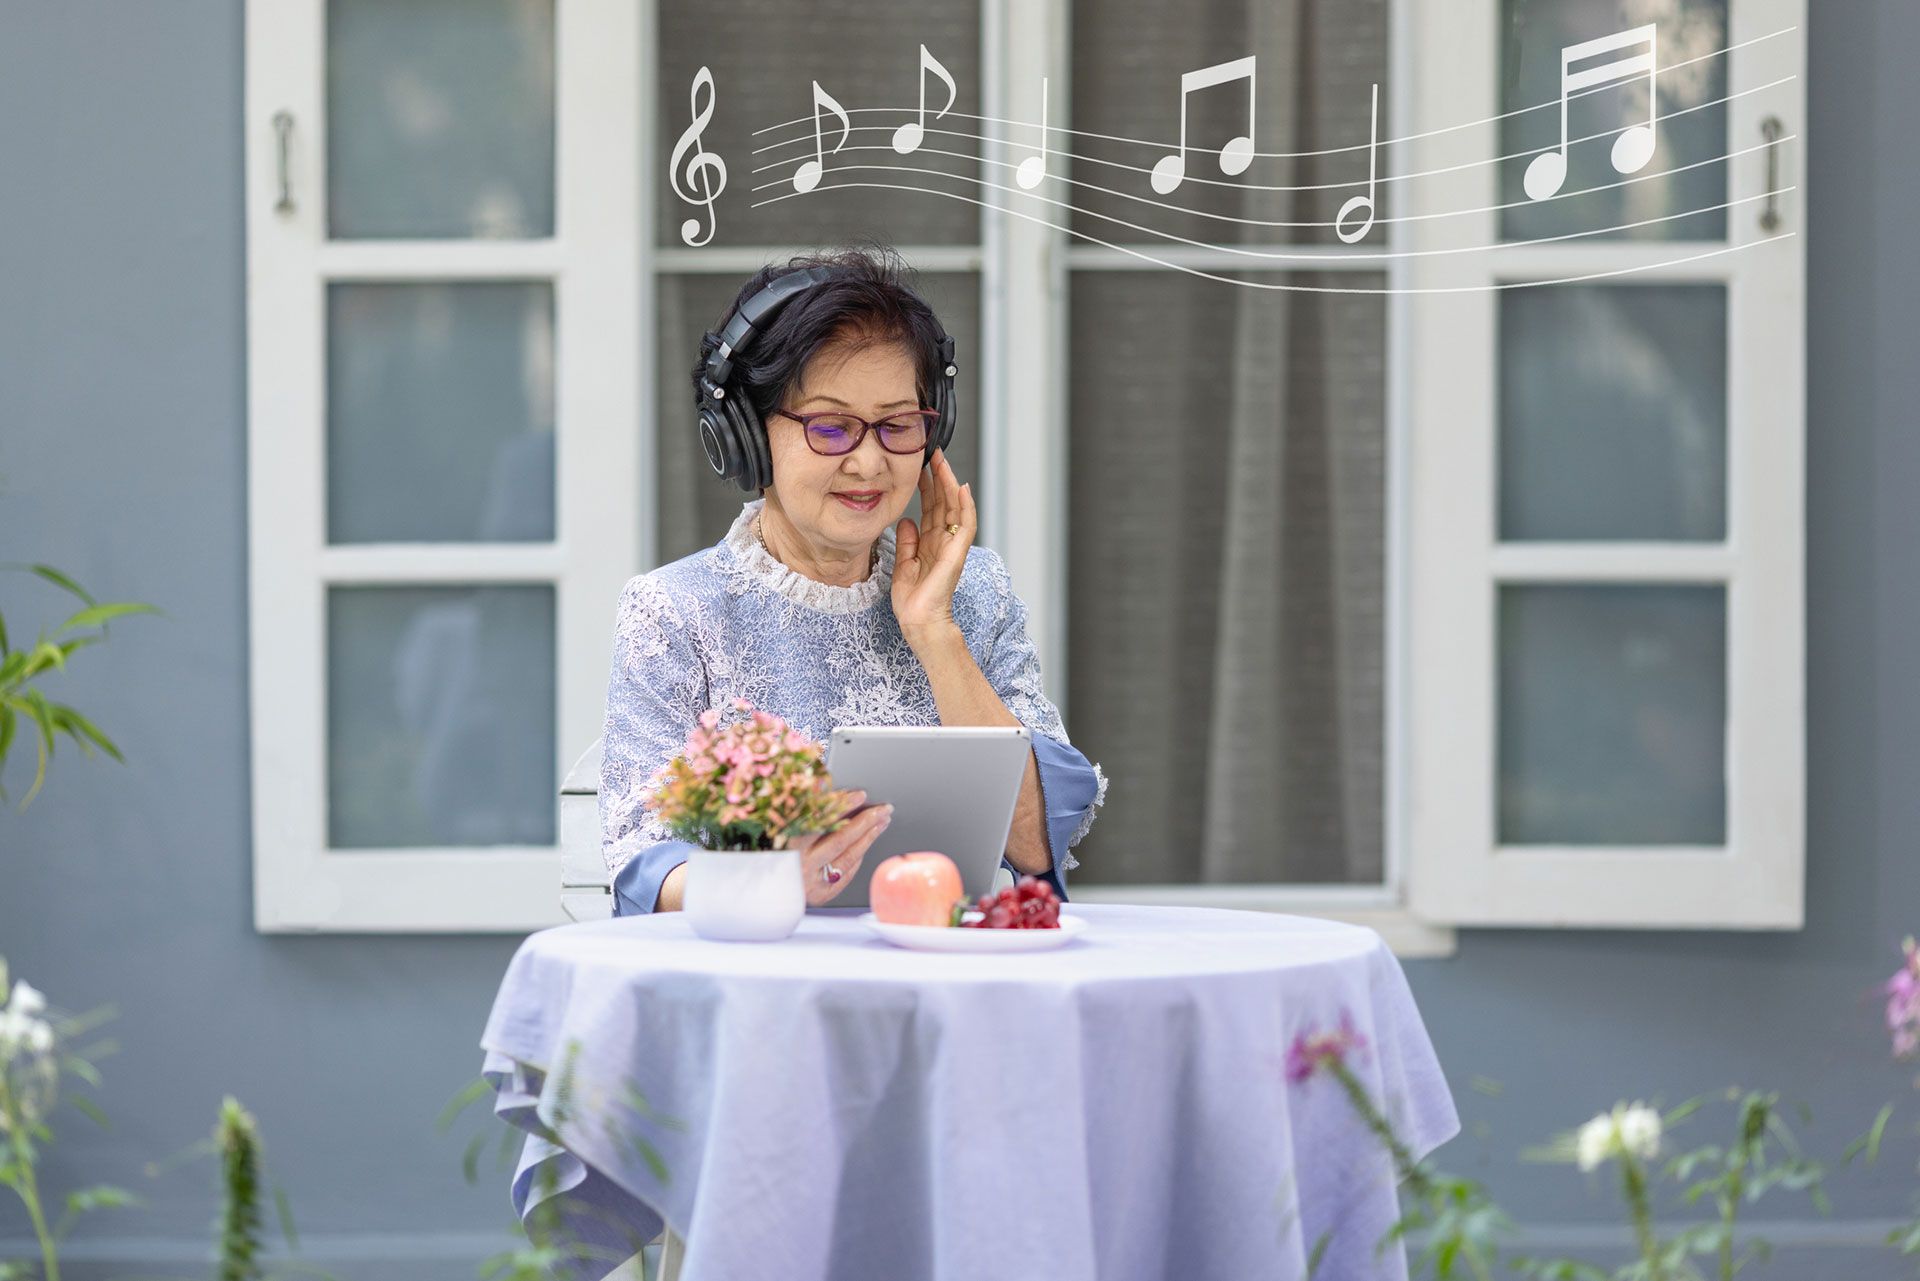 Senior woman is listen music and pose share good news at social media via computer tablet